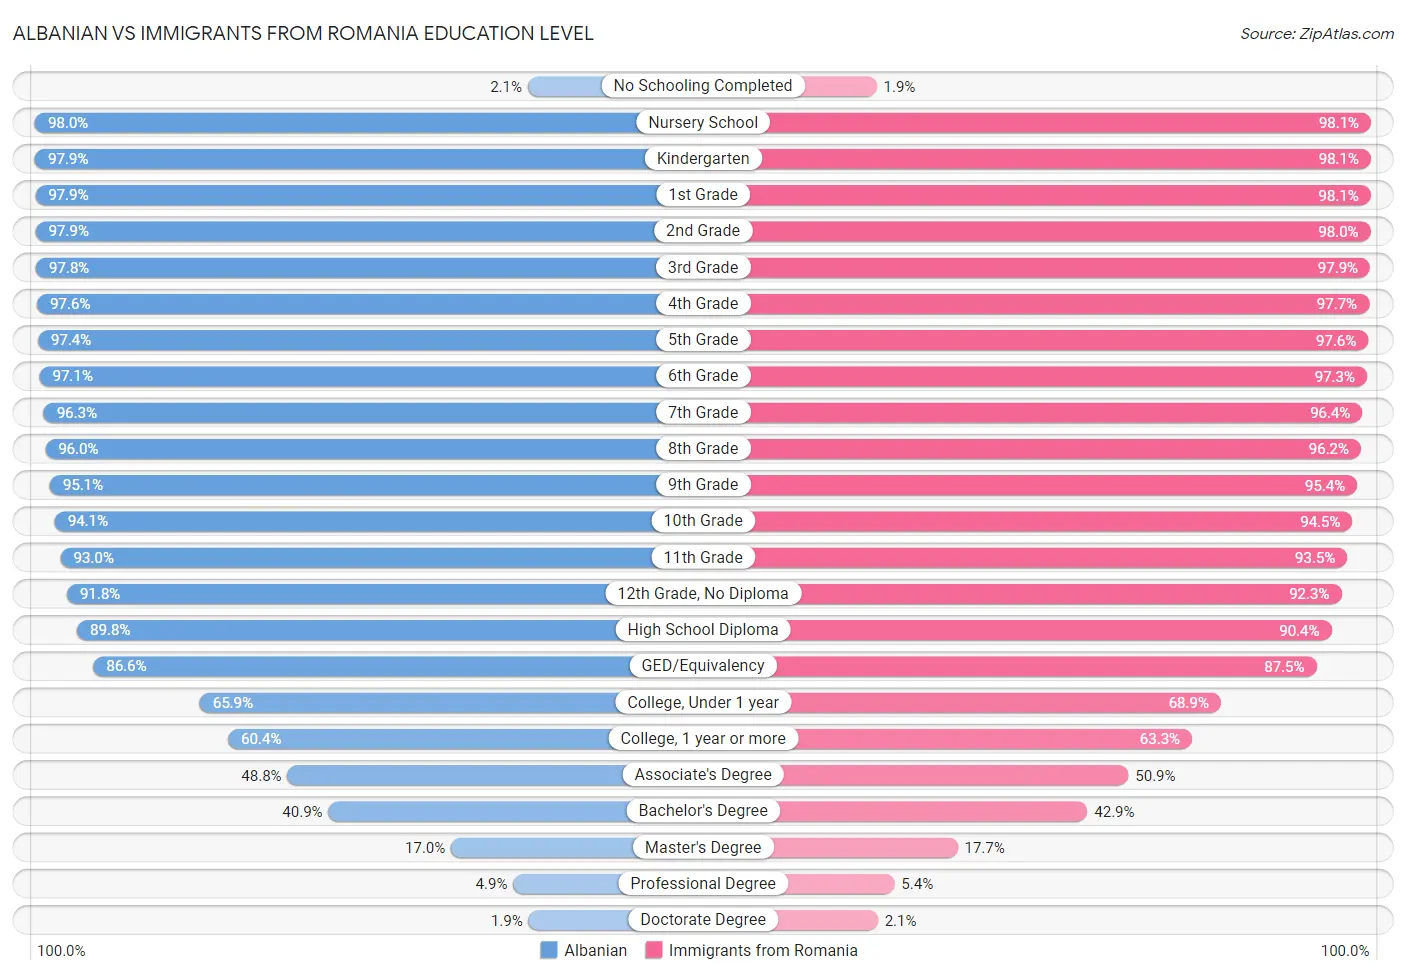 Albanian vs Immigrants from Romania Education Level